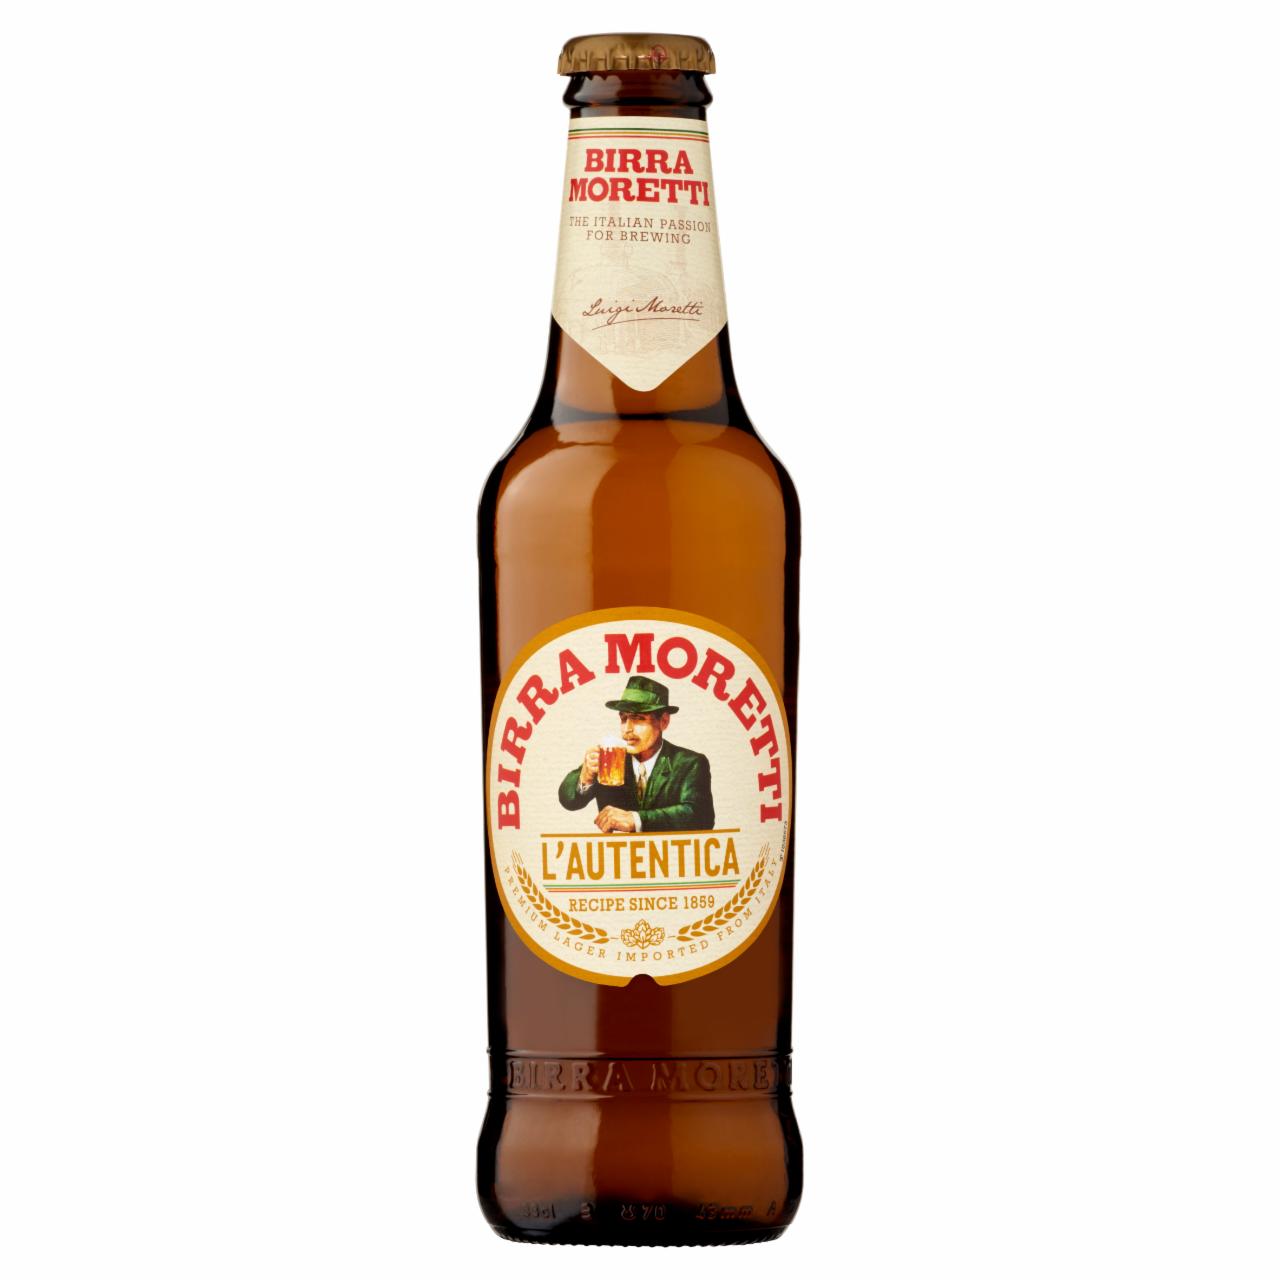 Képek - Birra Moretti világos sör 4,6% 0,33 l üveg